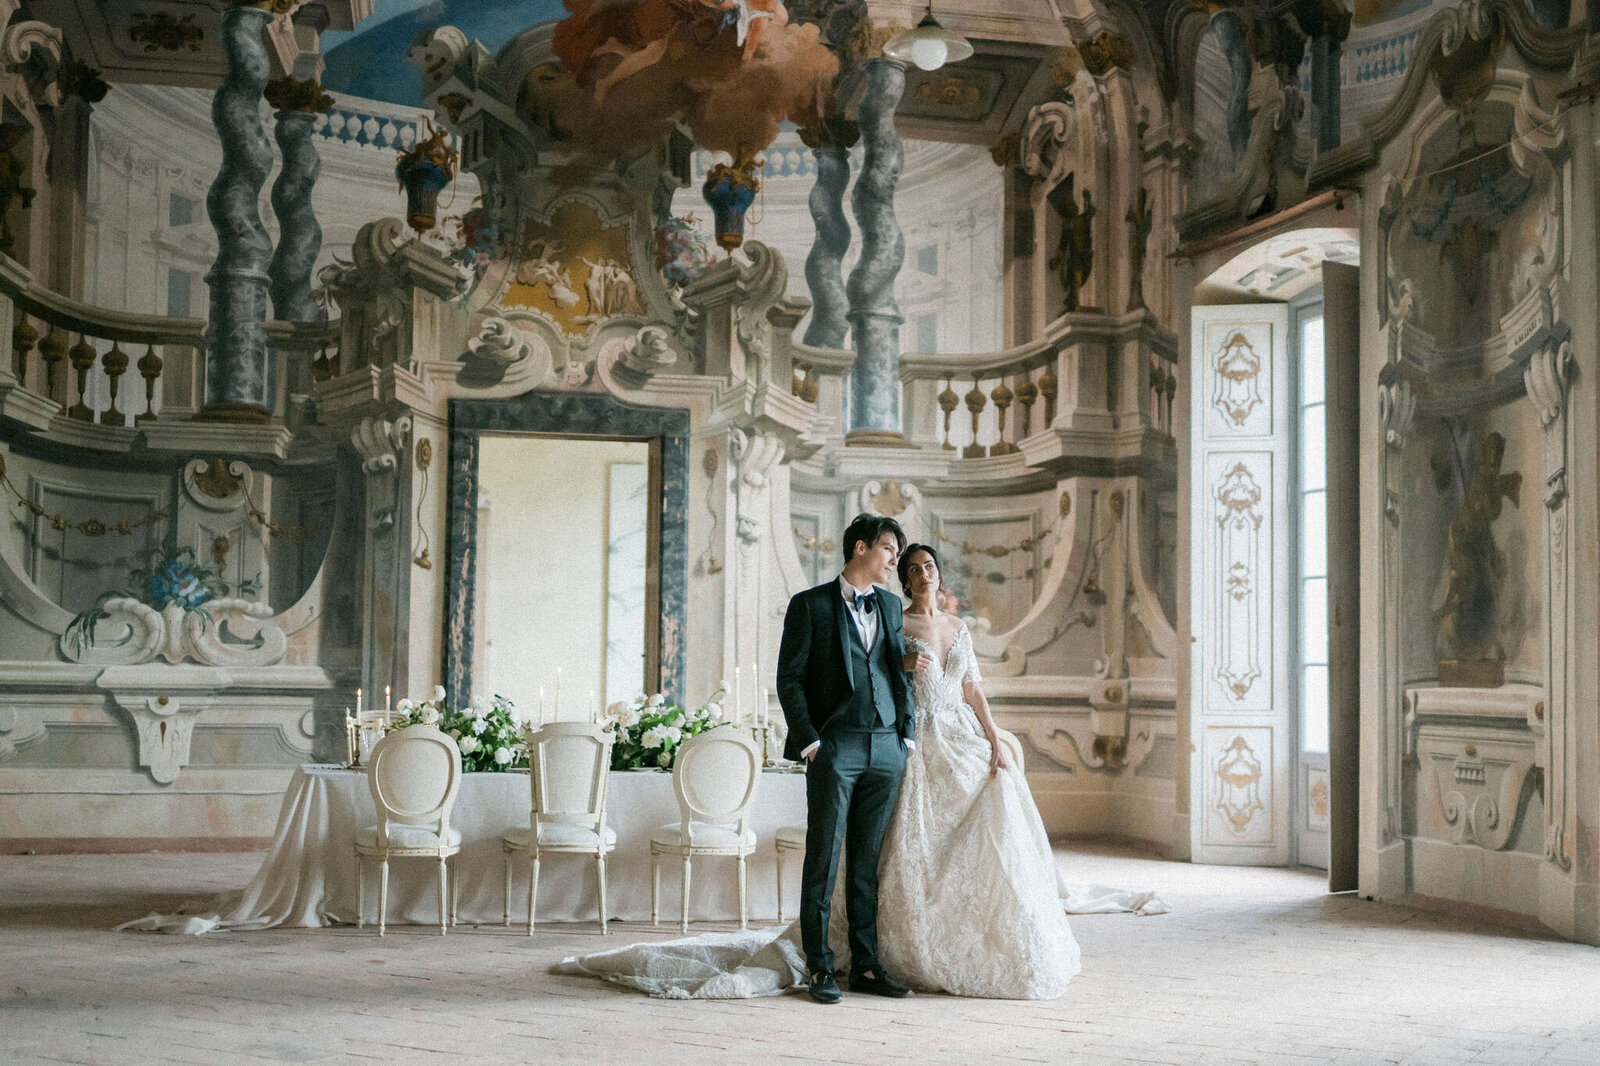 101-Villa-Arconati-Milan-Italy-Cinematic-Romance-Destination-Weddingl-Editorial-Luxury-Fine-Art-Lisa-Vigliotta-Photography